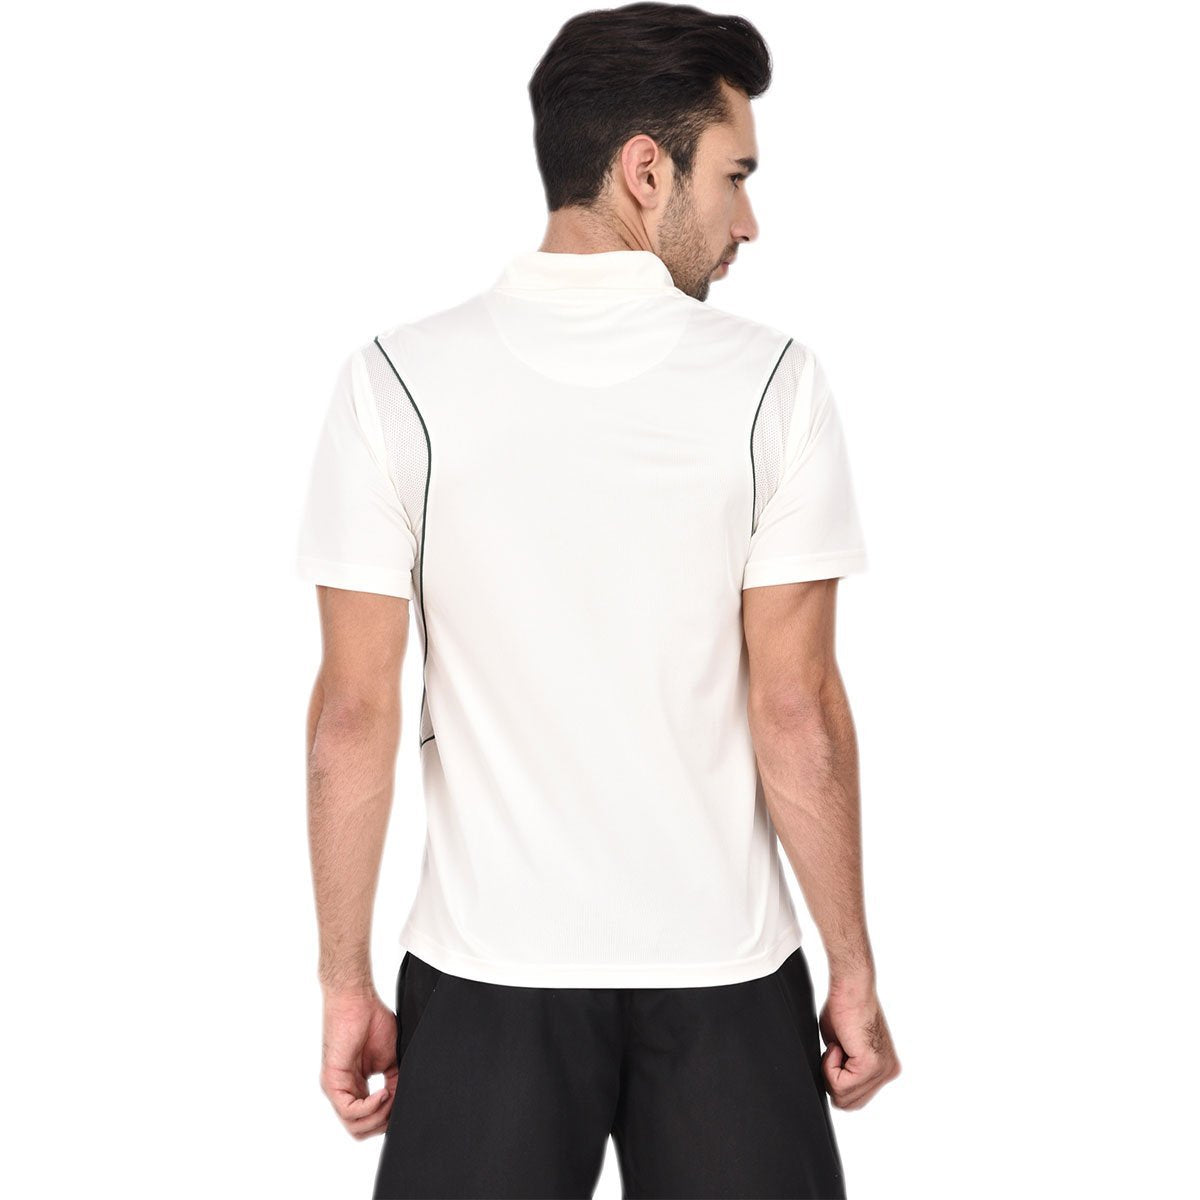 Kookaburra Cricket T-Shirt Half Sleeve, White - Best Price online Prokicksports.com